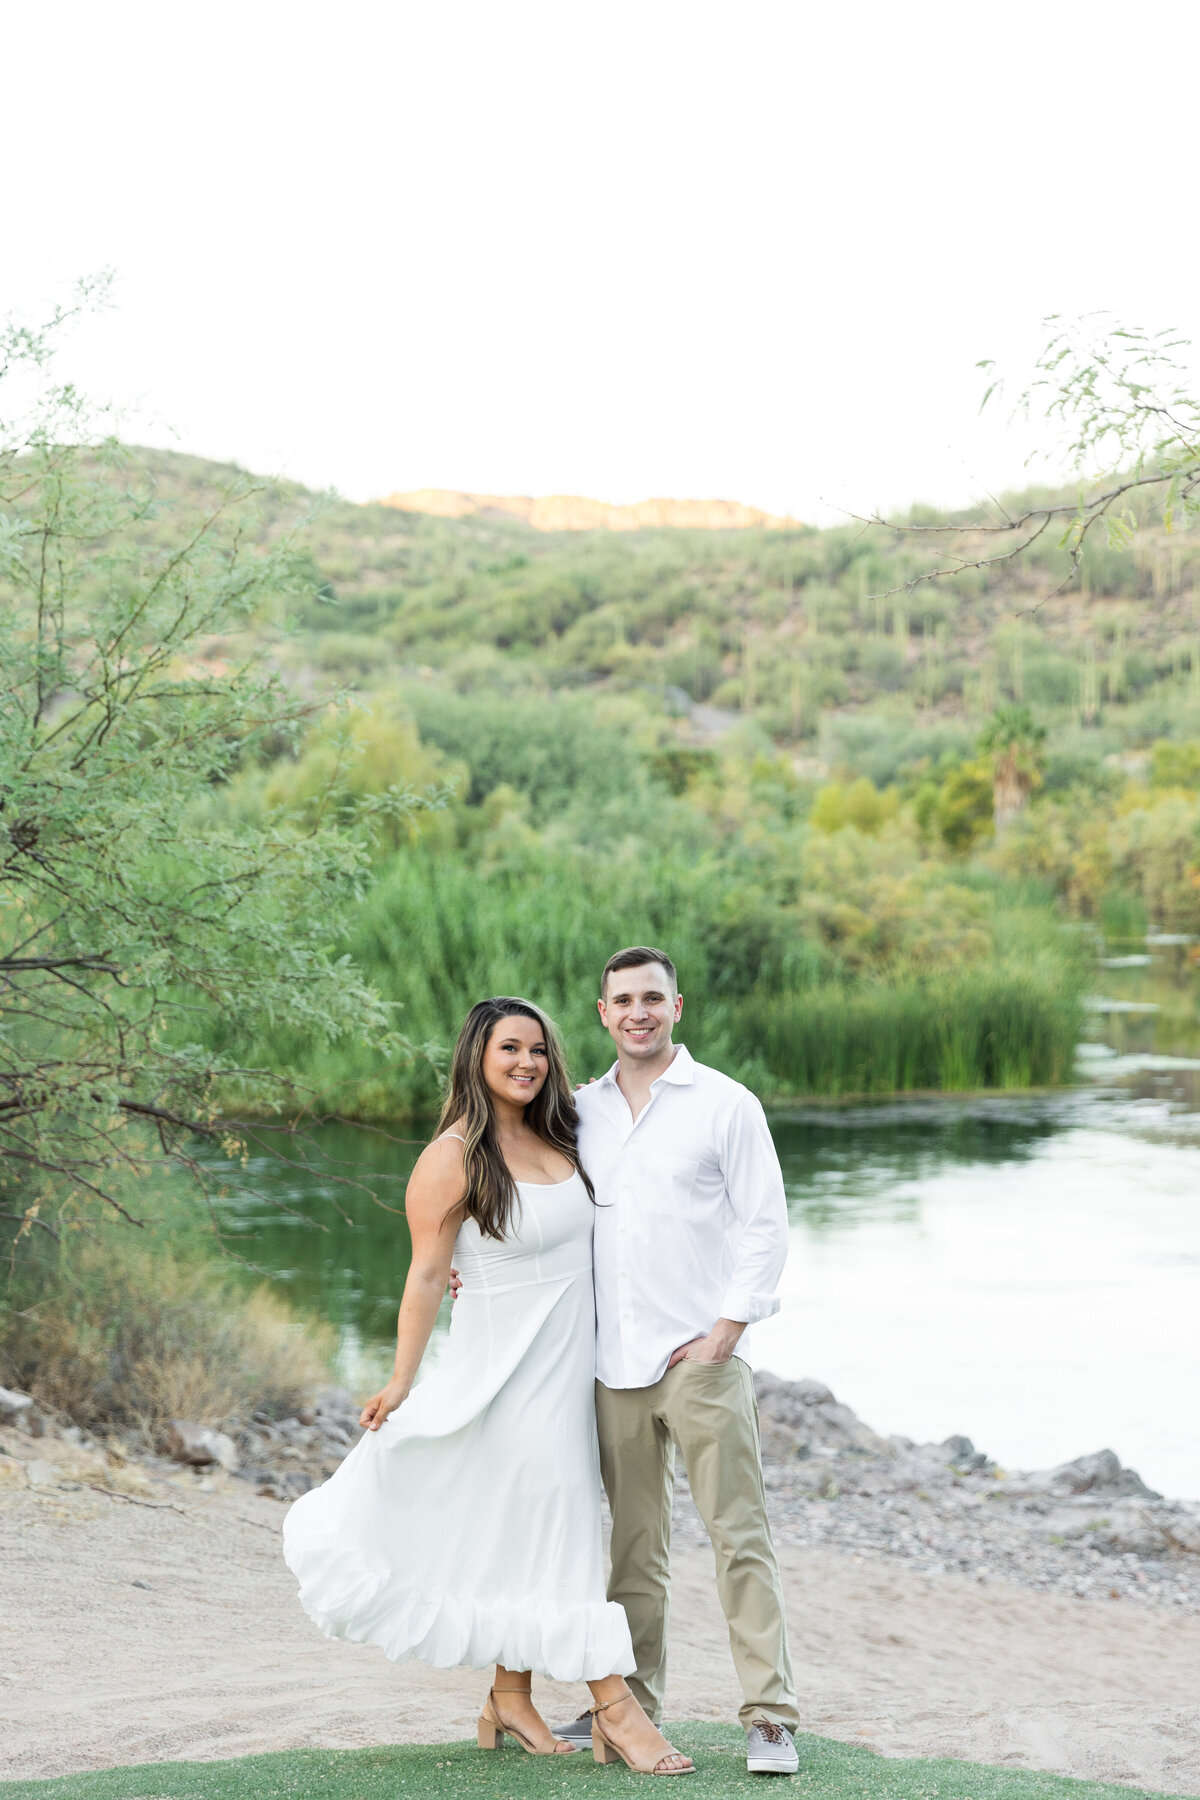 Karlie Colleen Photography - Kaitlyn & Cristian Engagement Session - Salt River Arizona-316